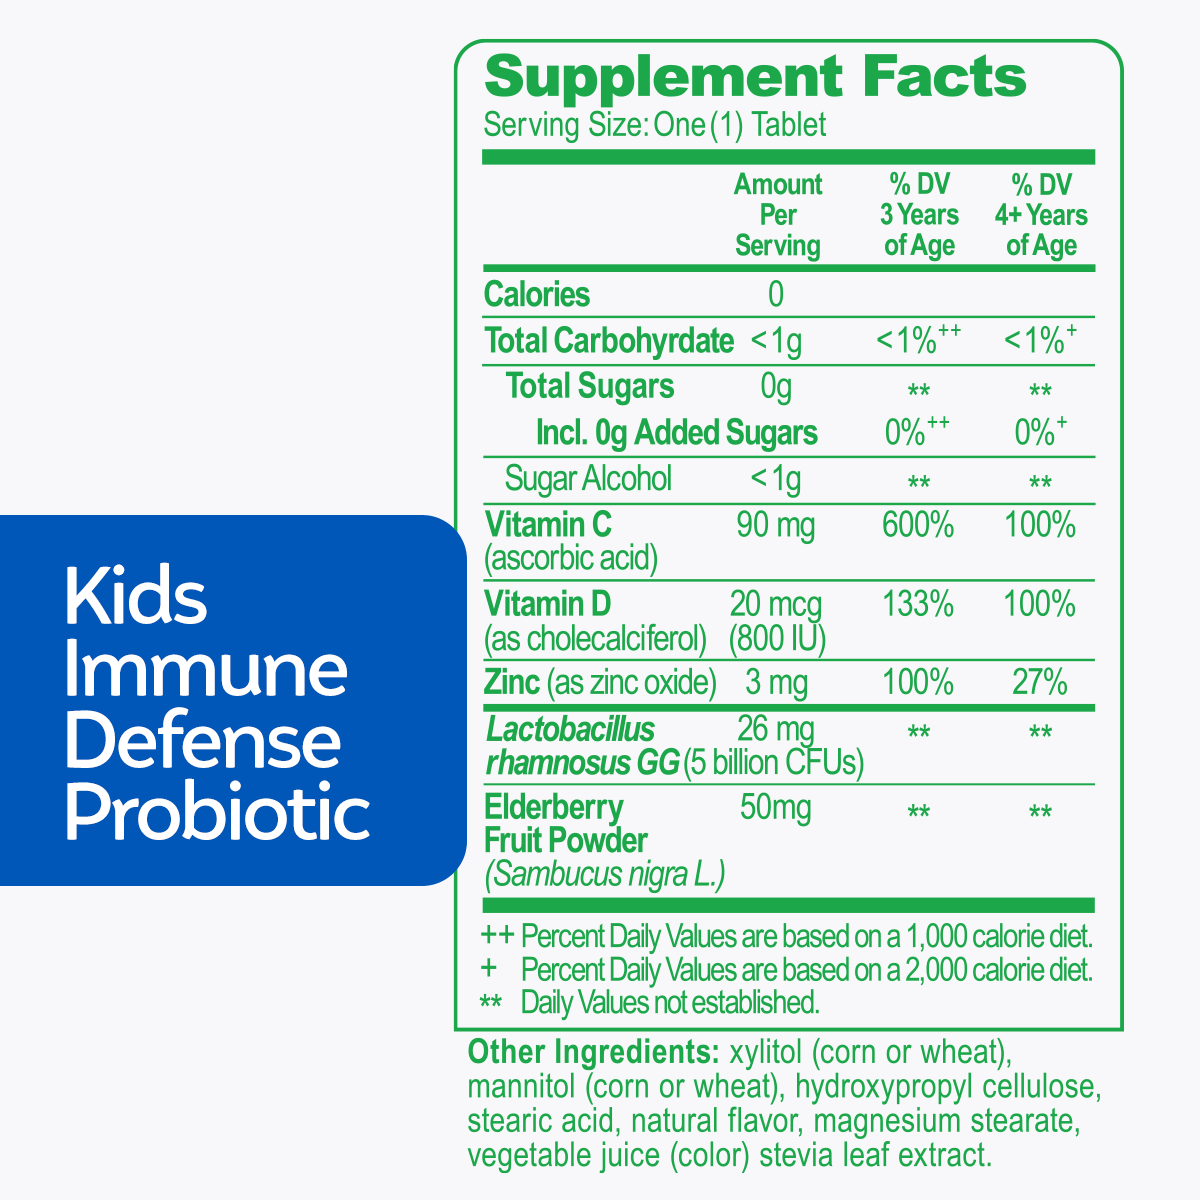 kids immune defense probiotic supplement facts